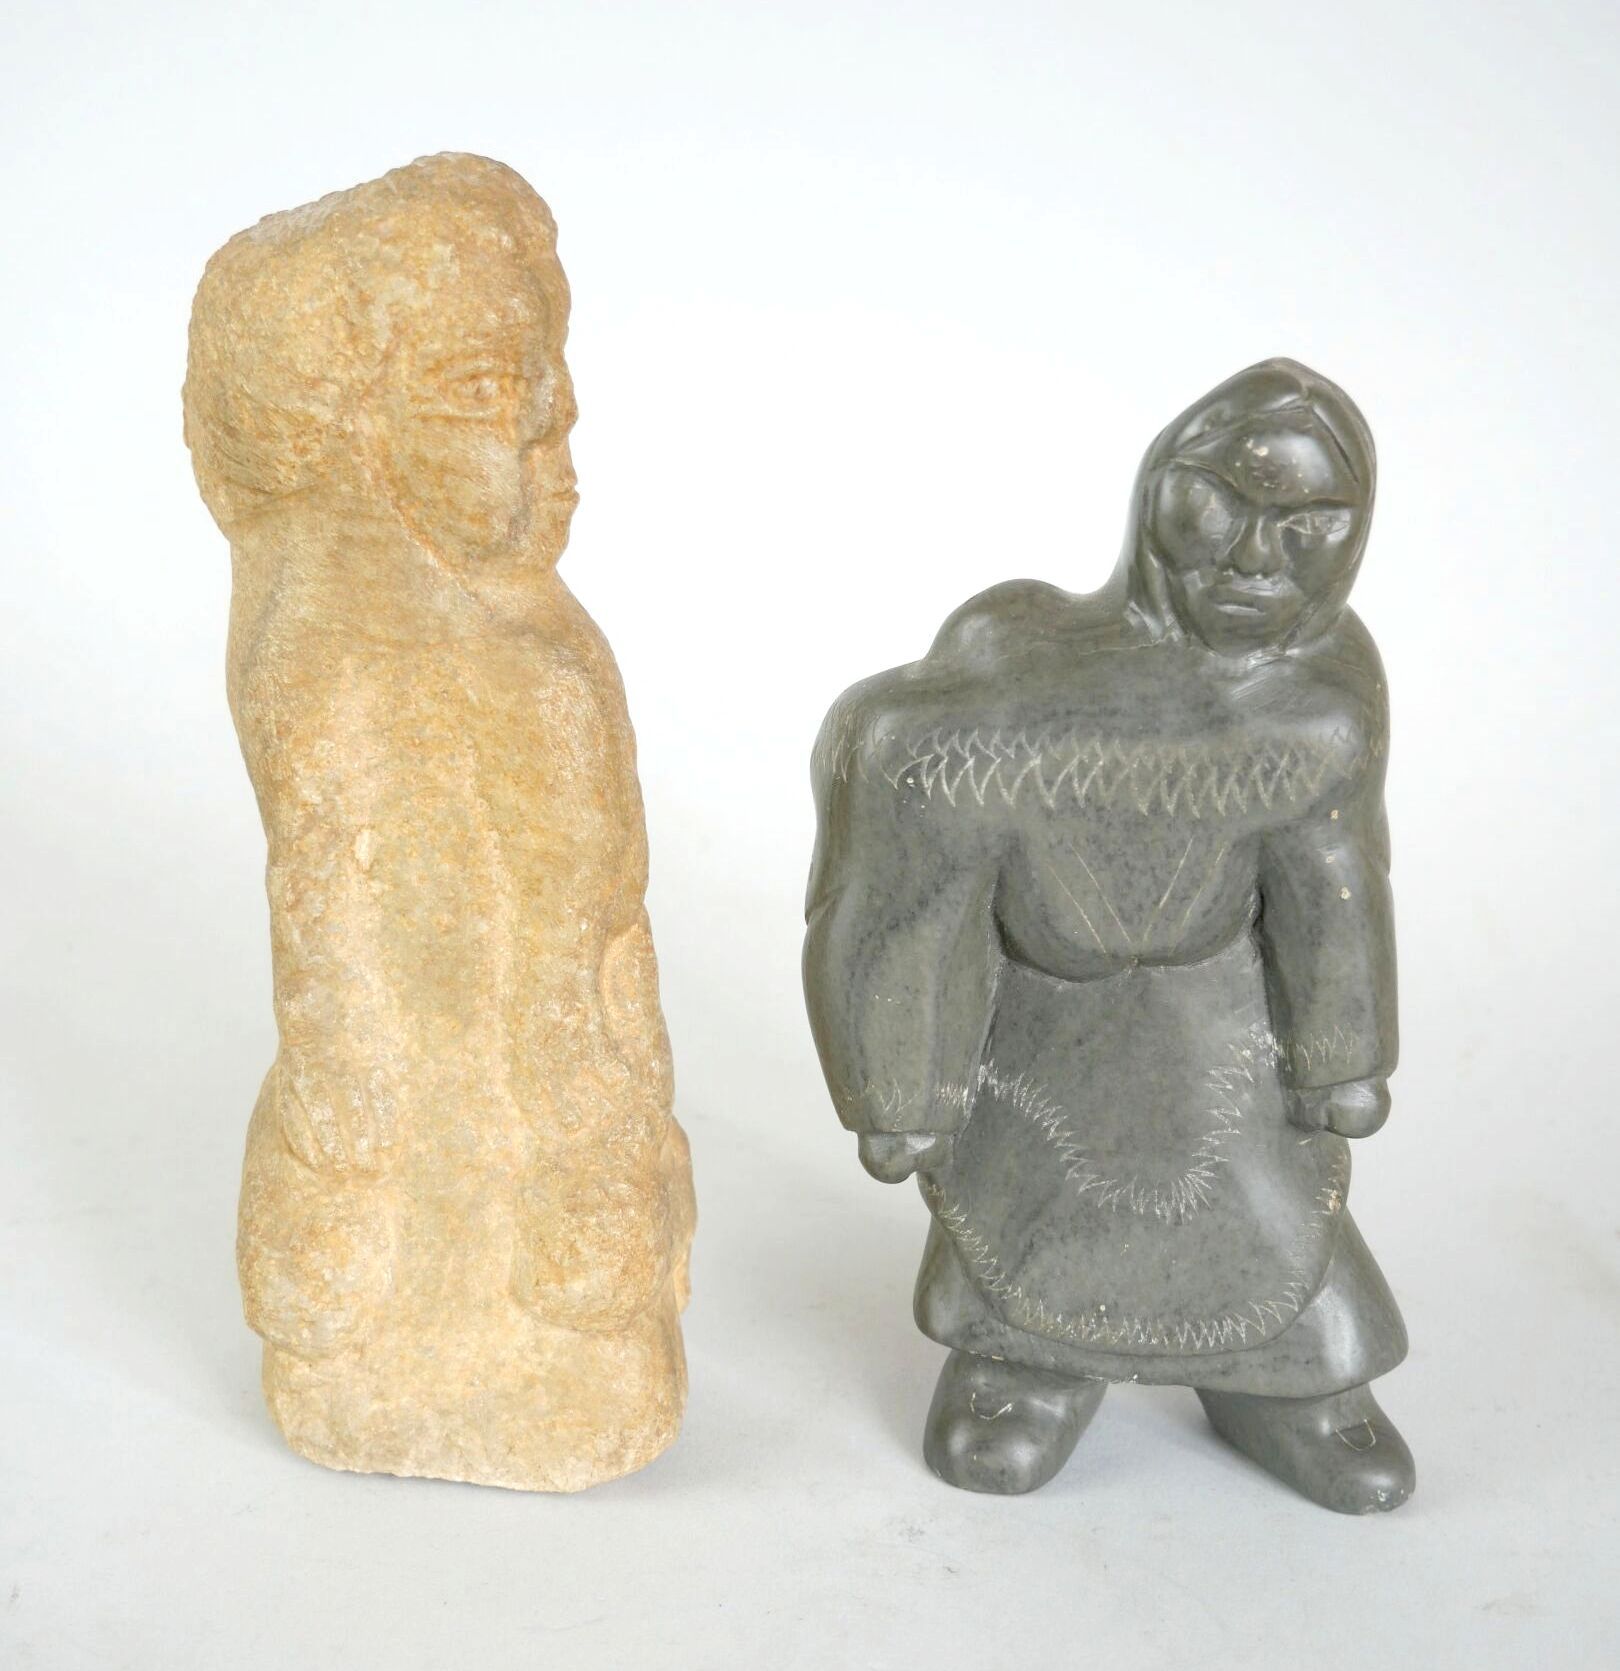 Null 安妮-诺瓦林加 (1951)

母亲和孩子

石雕，有刻字装饰，左脚下有难以辨认的注释，右脚下有签名。

尺寸：14.5 x 7 x 3厘米

(芯片&hellip;